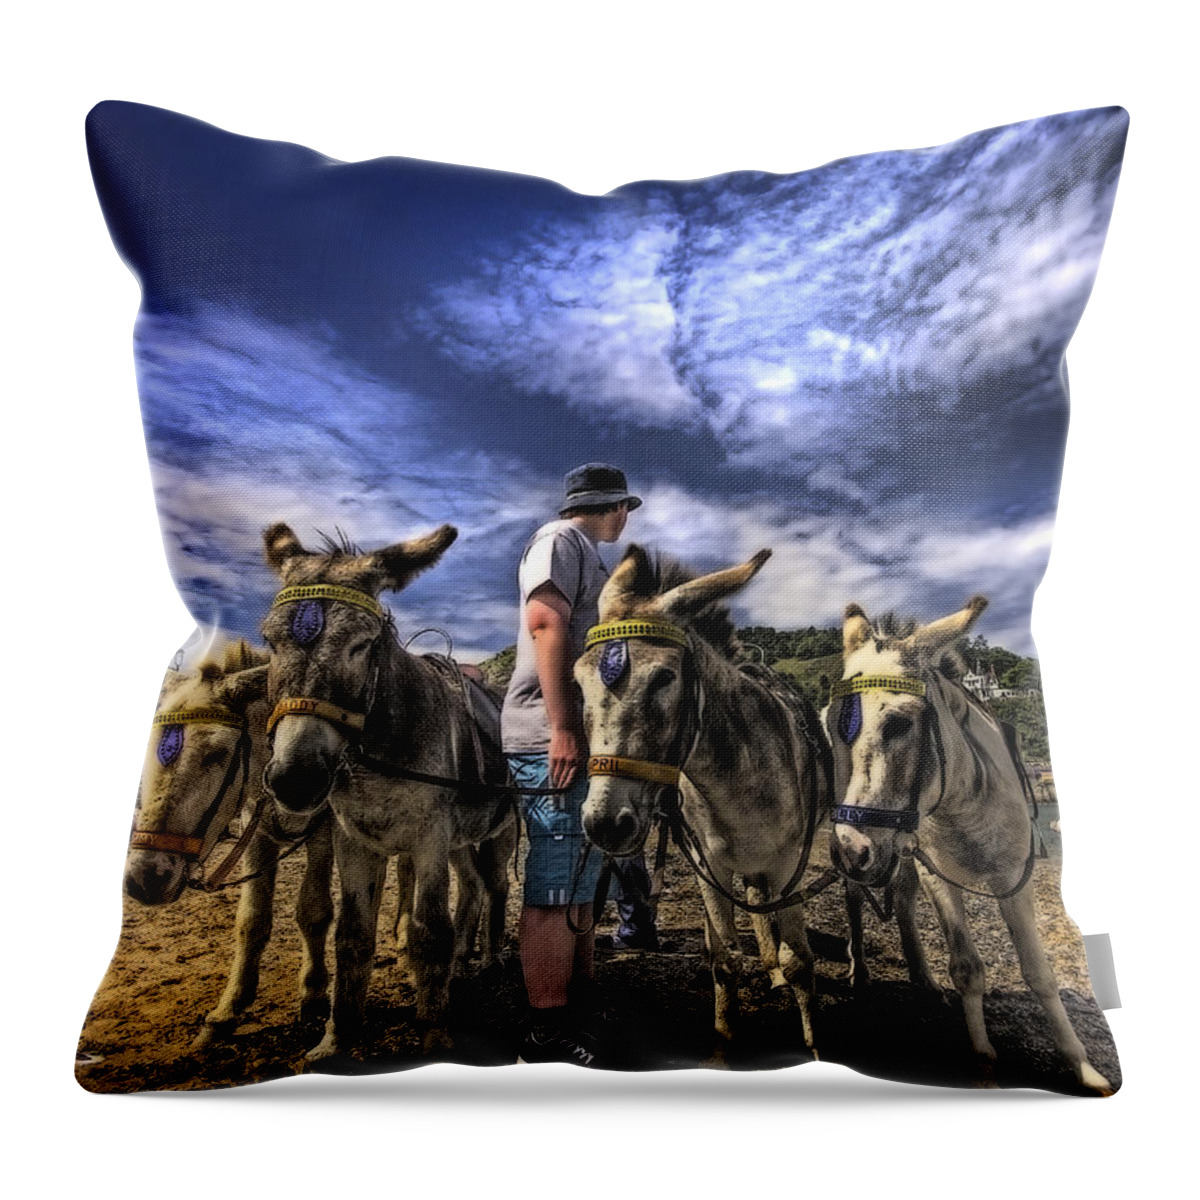 Donkey Throw Pillow featuring the photograph Donkey Rides by Meirion Matthias